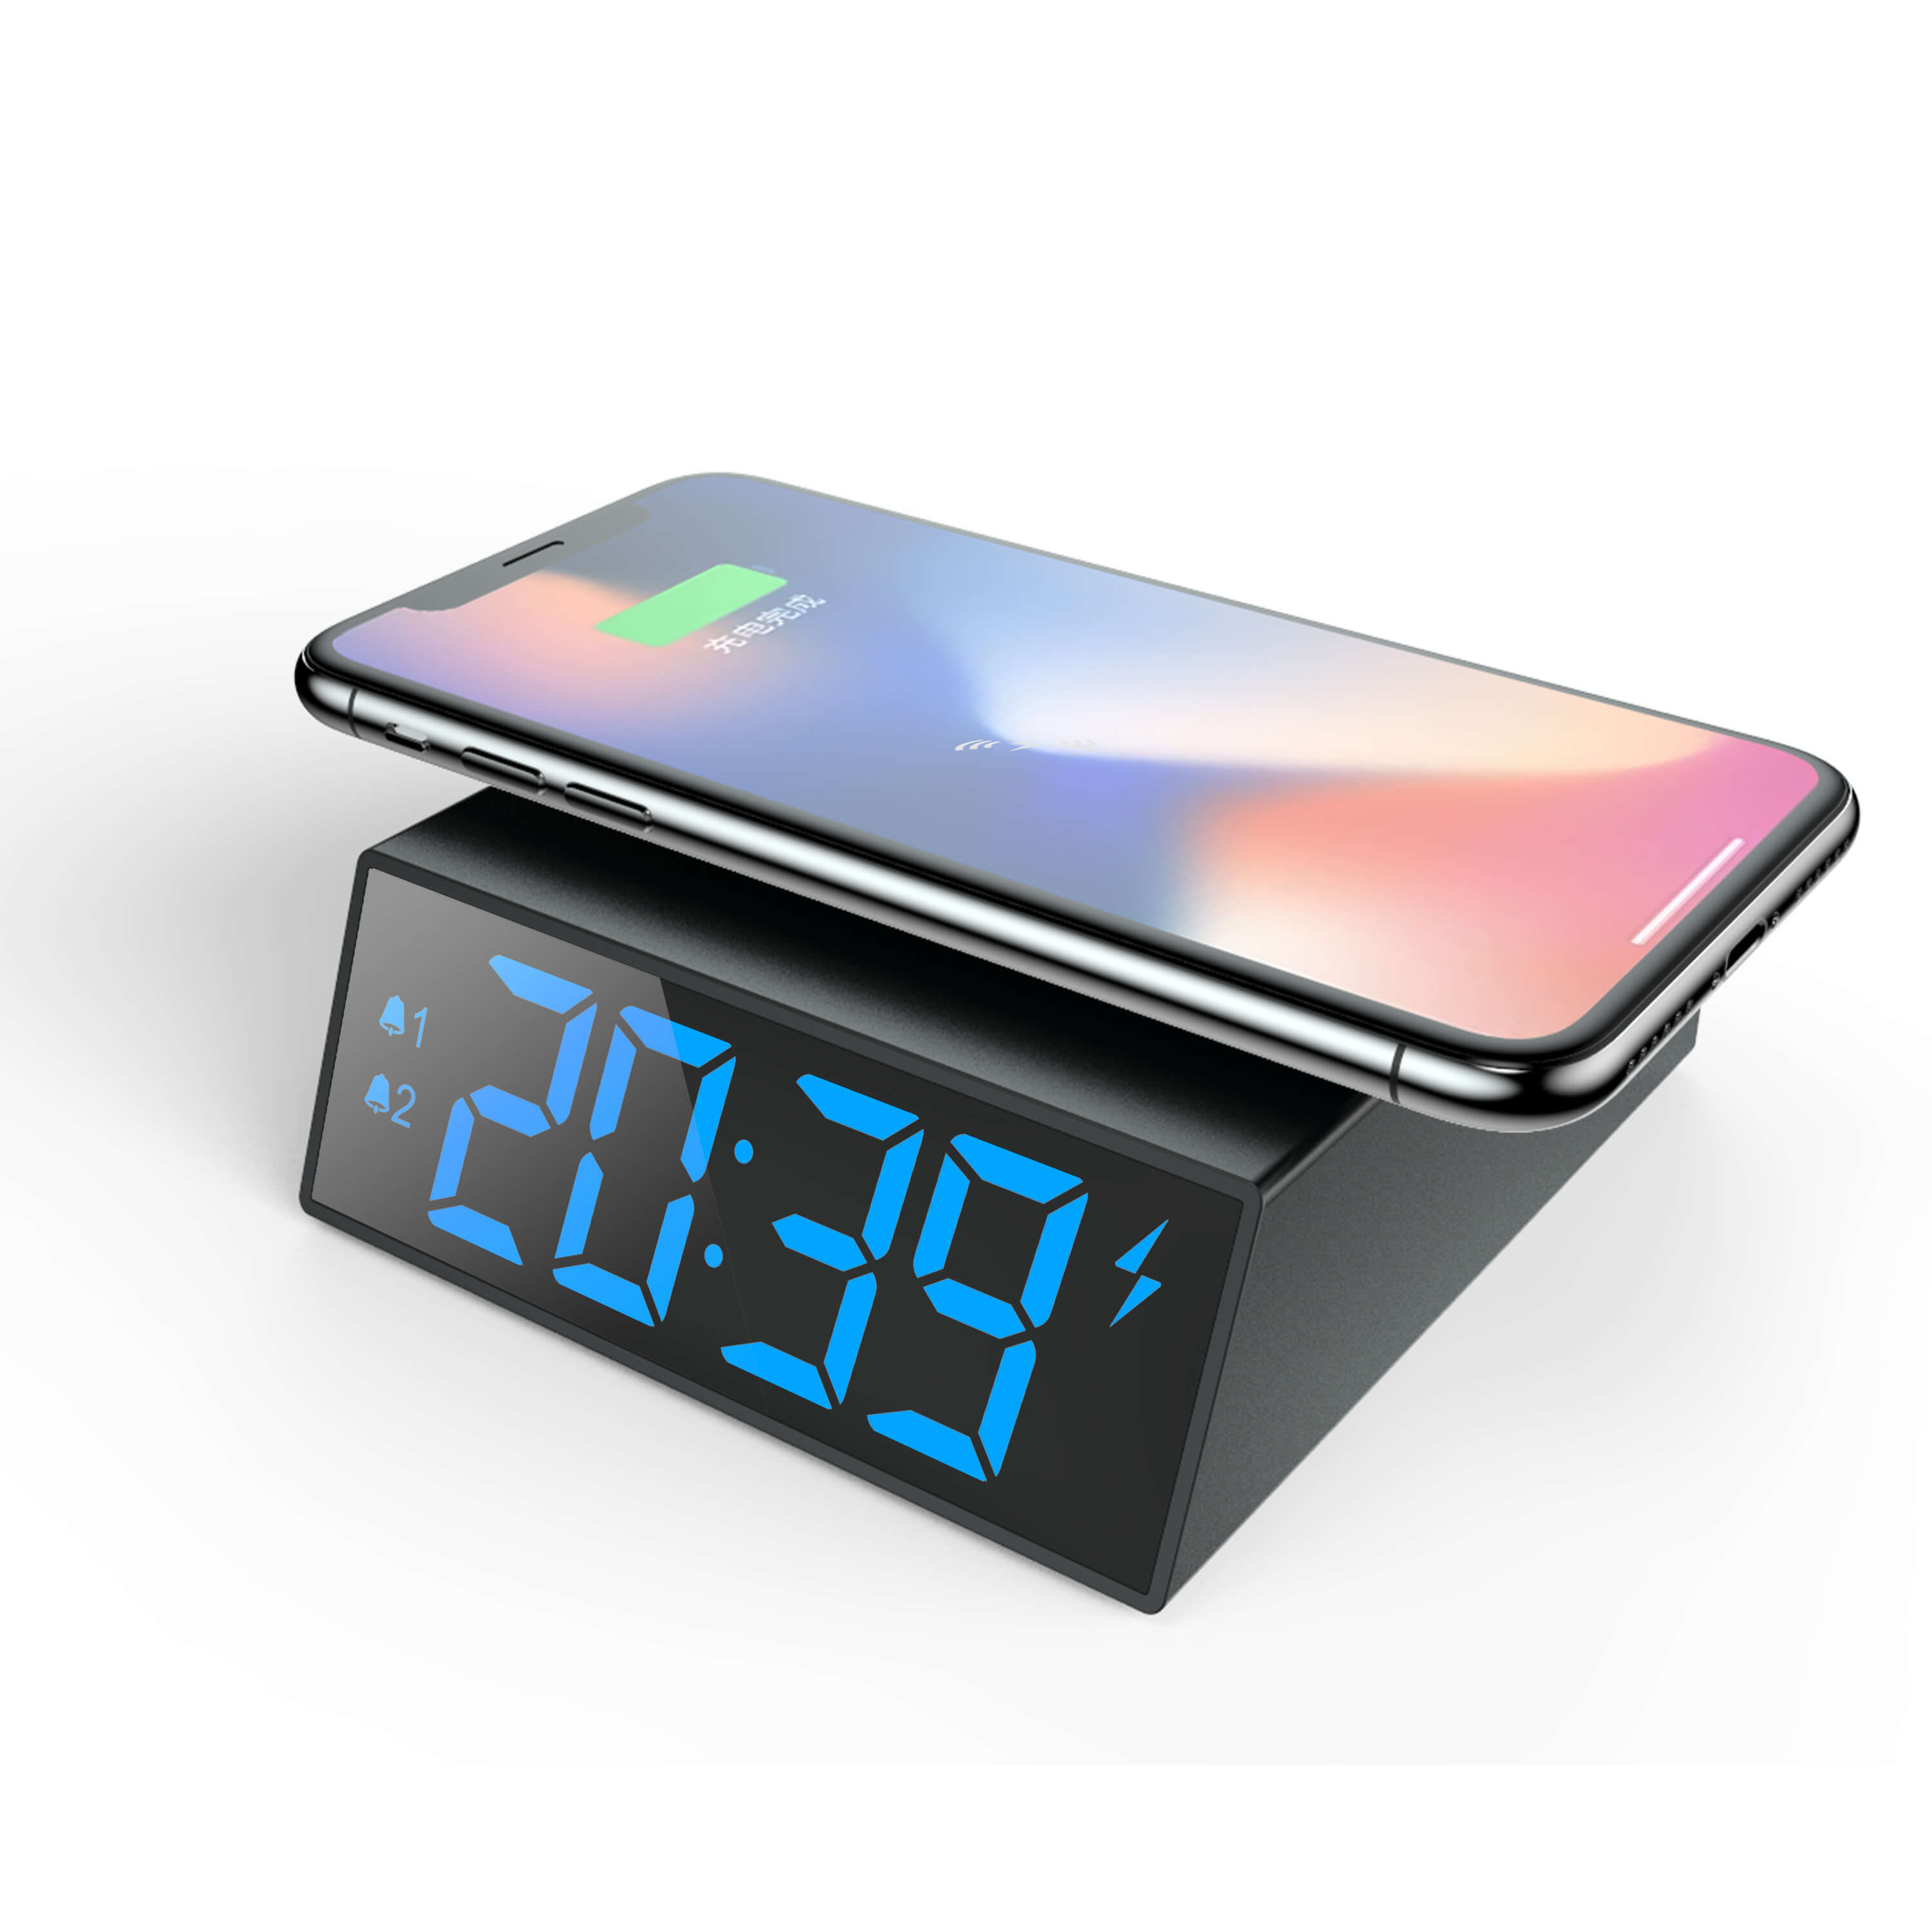 wireless alarm clock